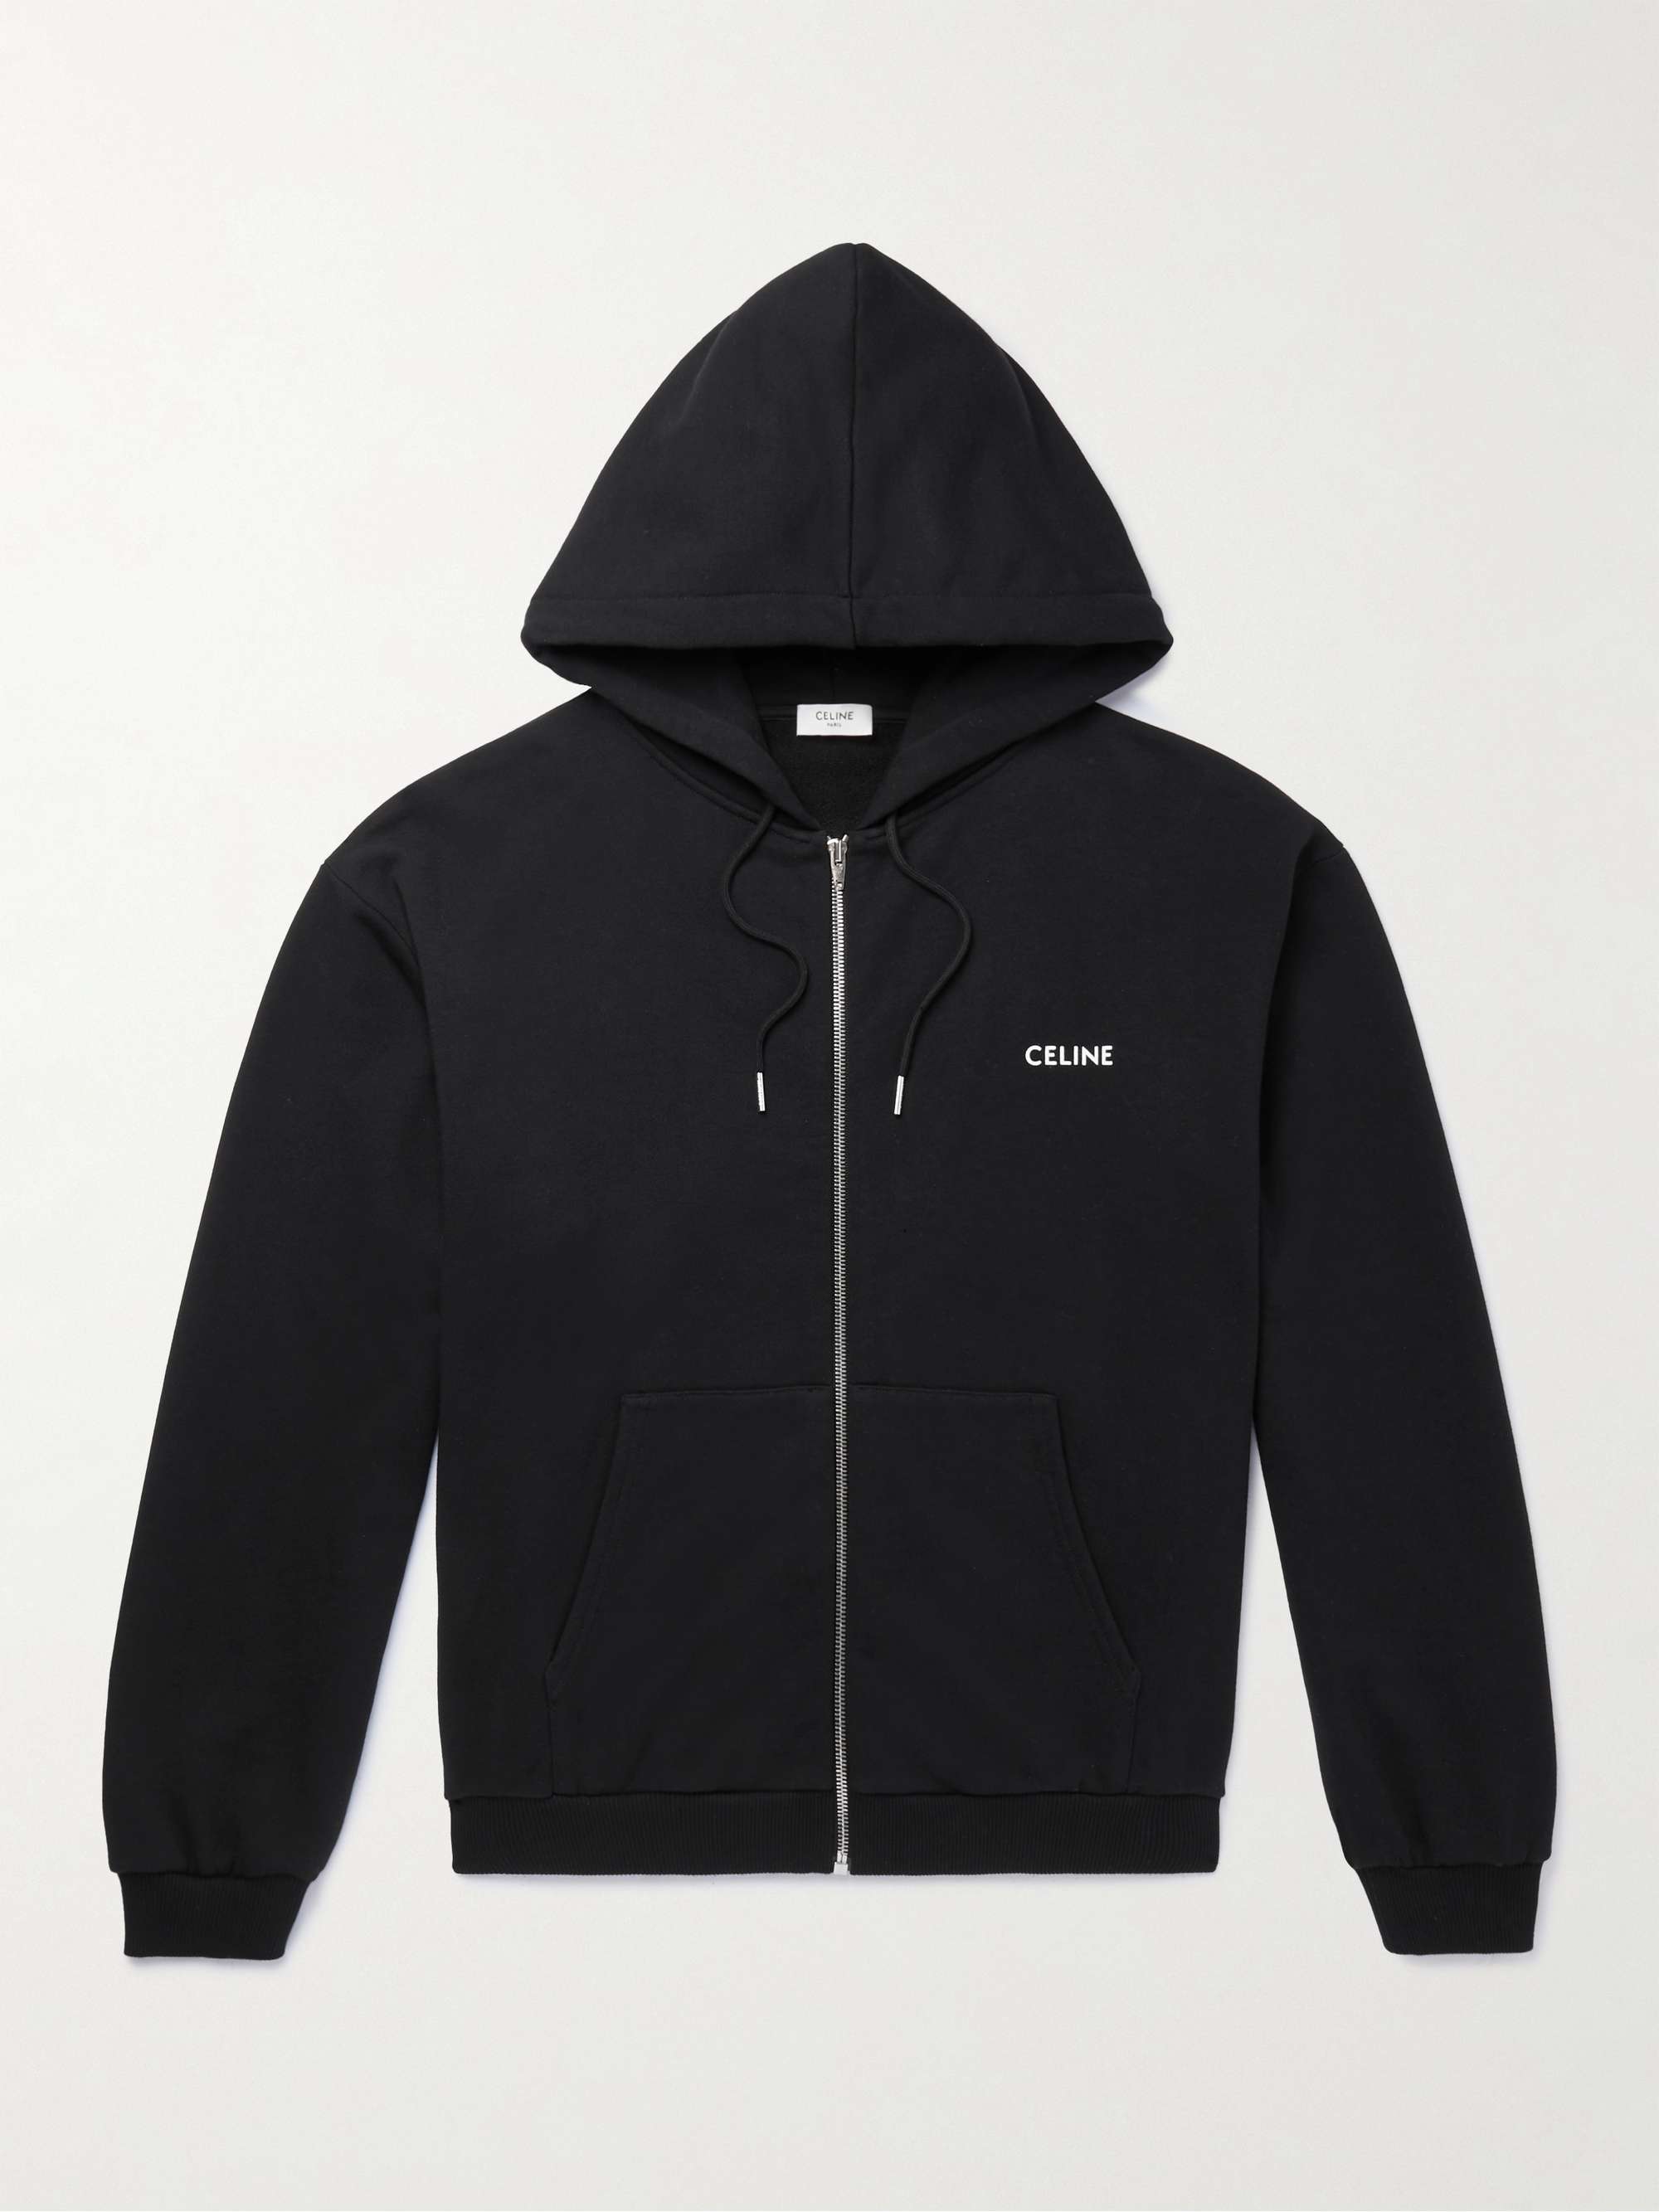 Celine Homme Triomphe logo-print Tech-Jersey Track Jacket - Men - Black Sweats - L